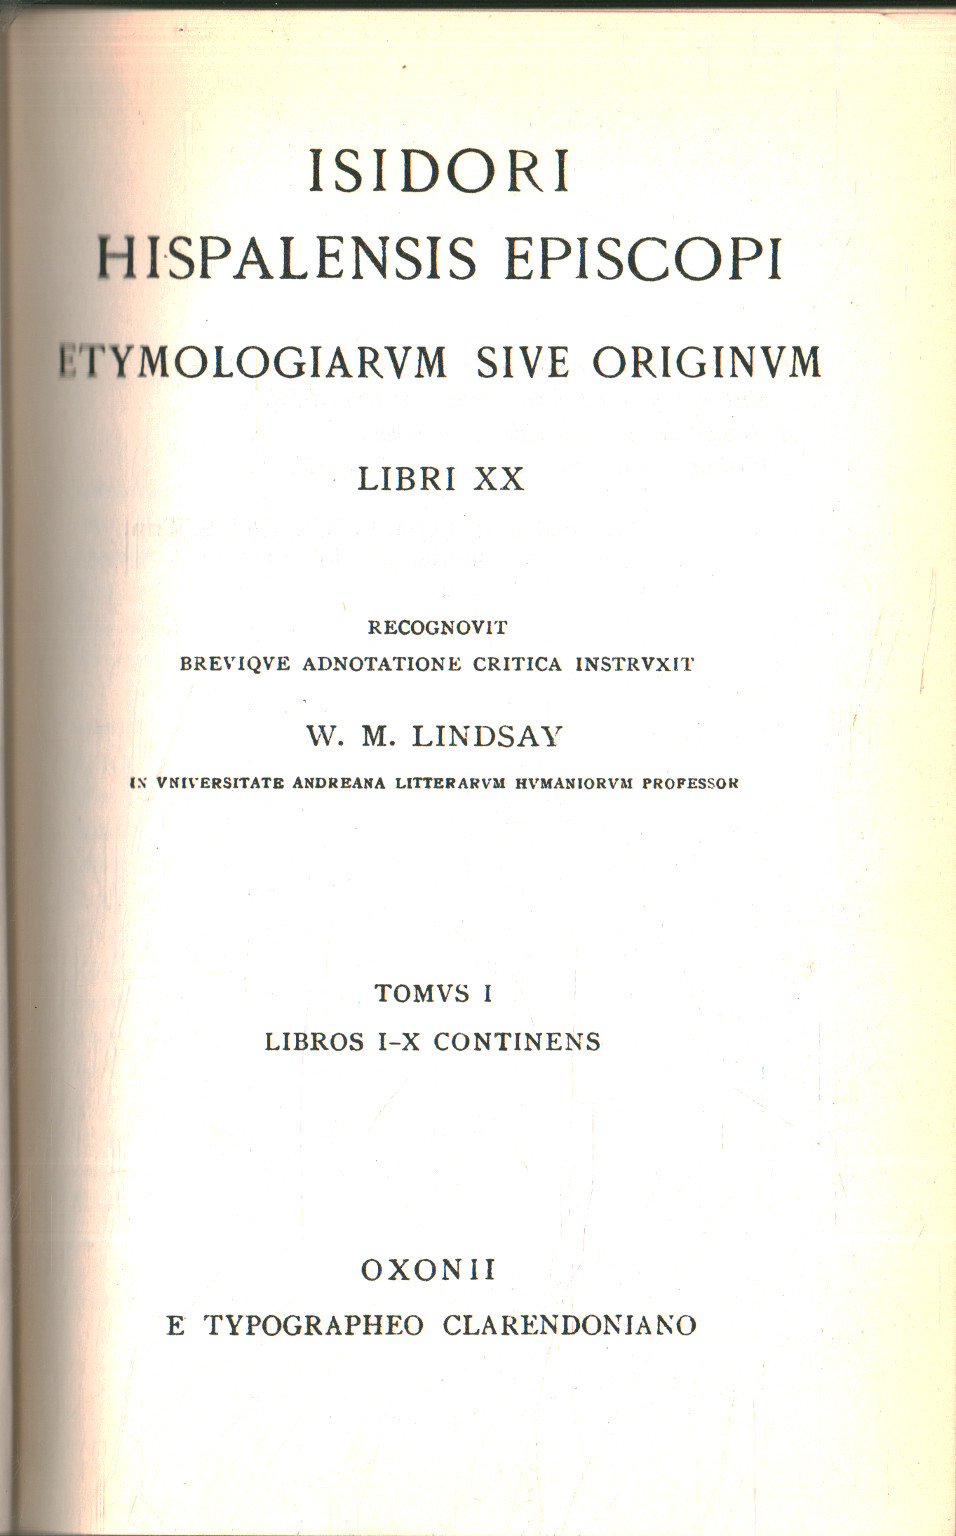 Etymologiarum sive originum. Volumen I, Isidori Hispalensis Episcopi